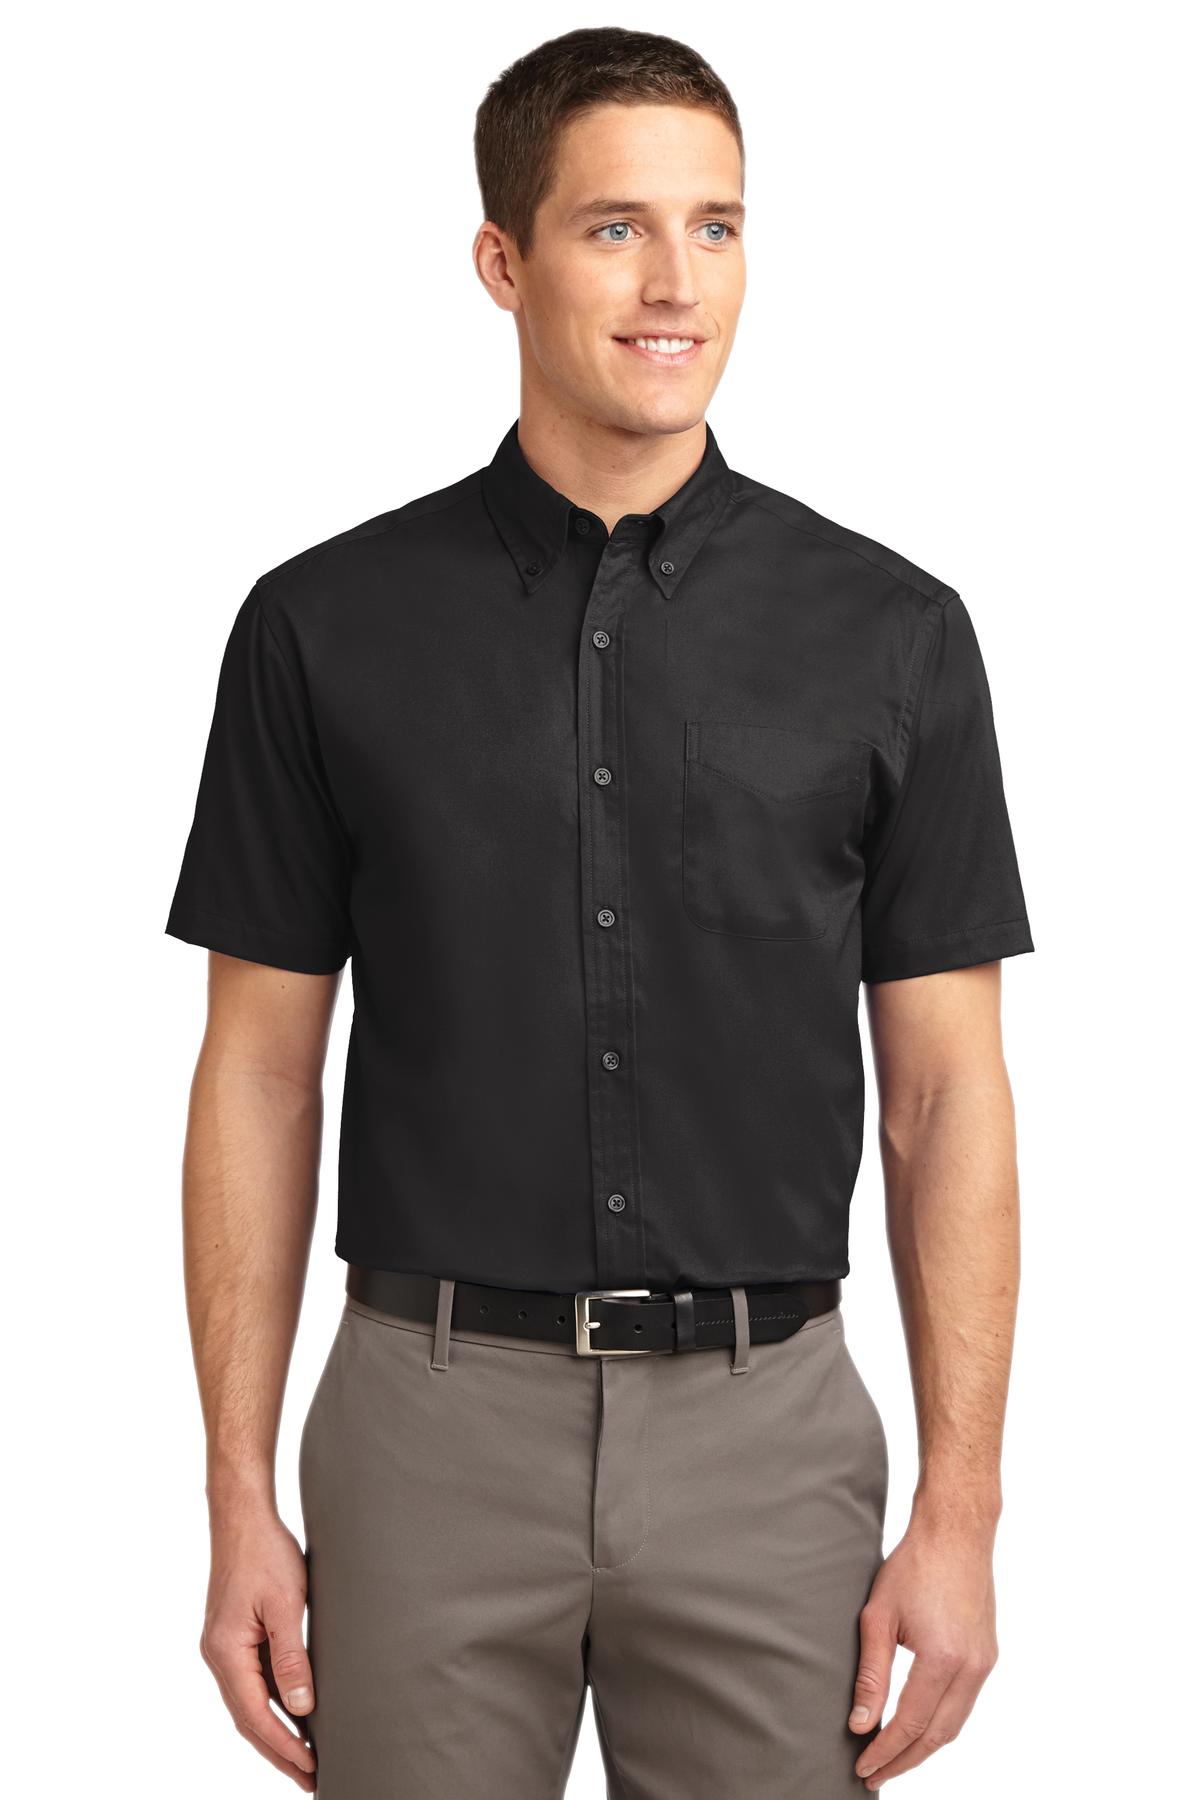 Port Authority Hospitality Tall Woven Shirts ® Tall Short Sleeve Easy Care Shirt.-Port Authority